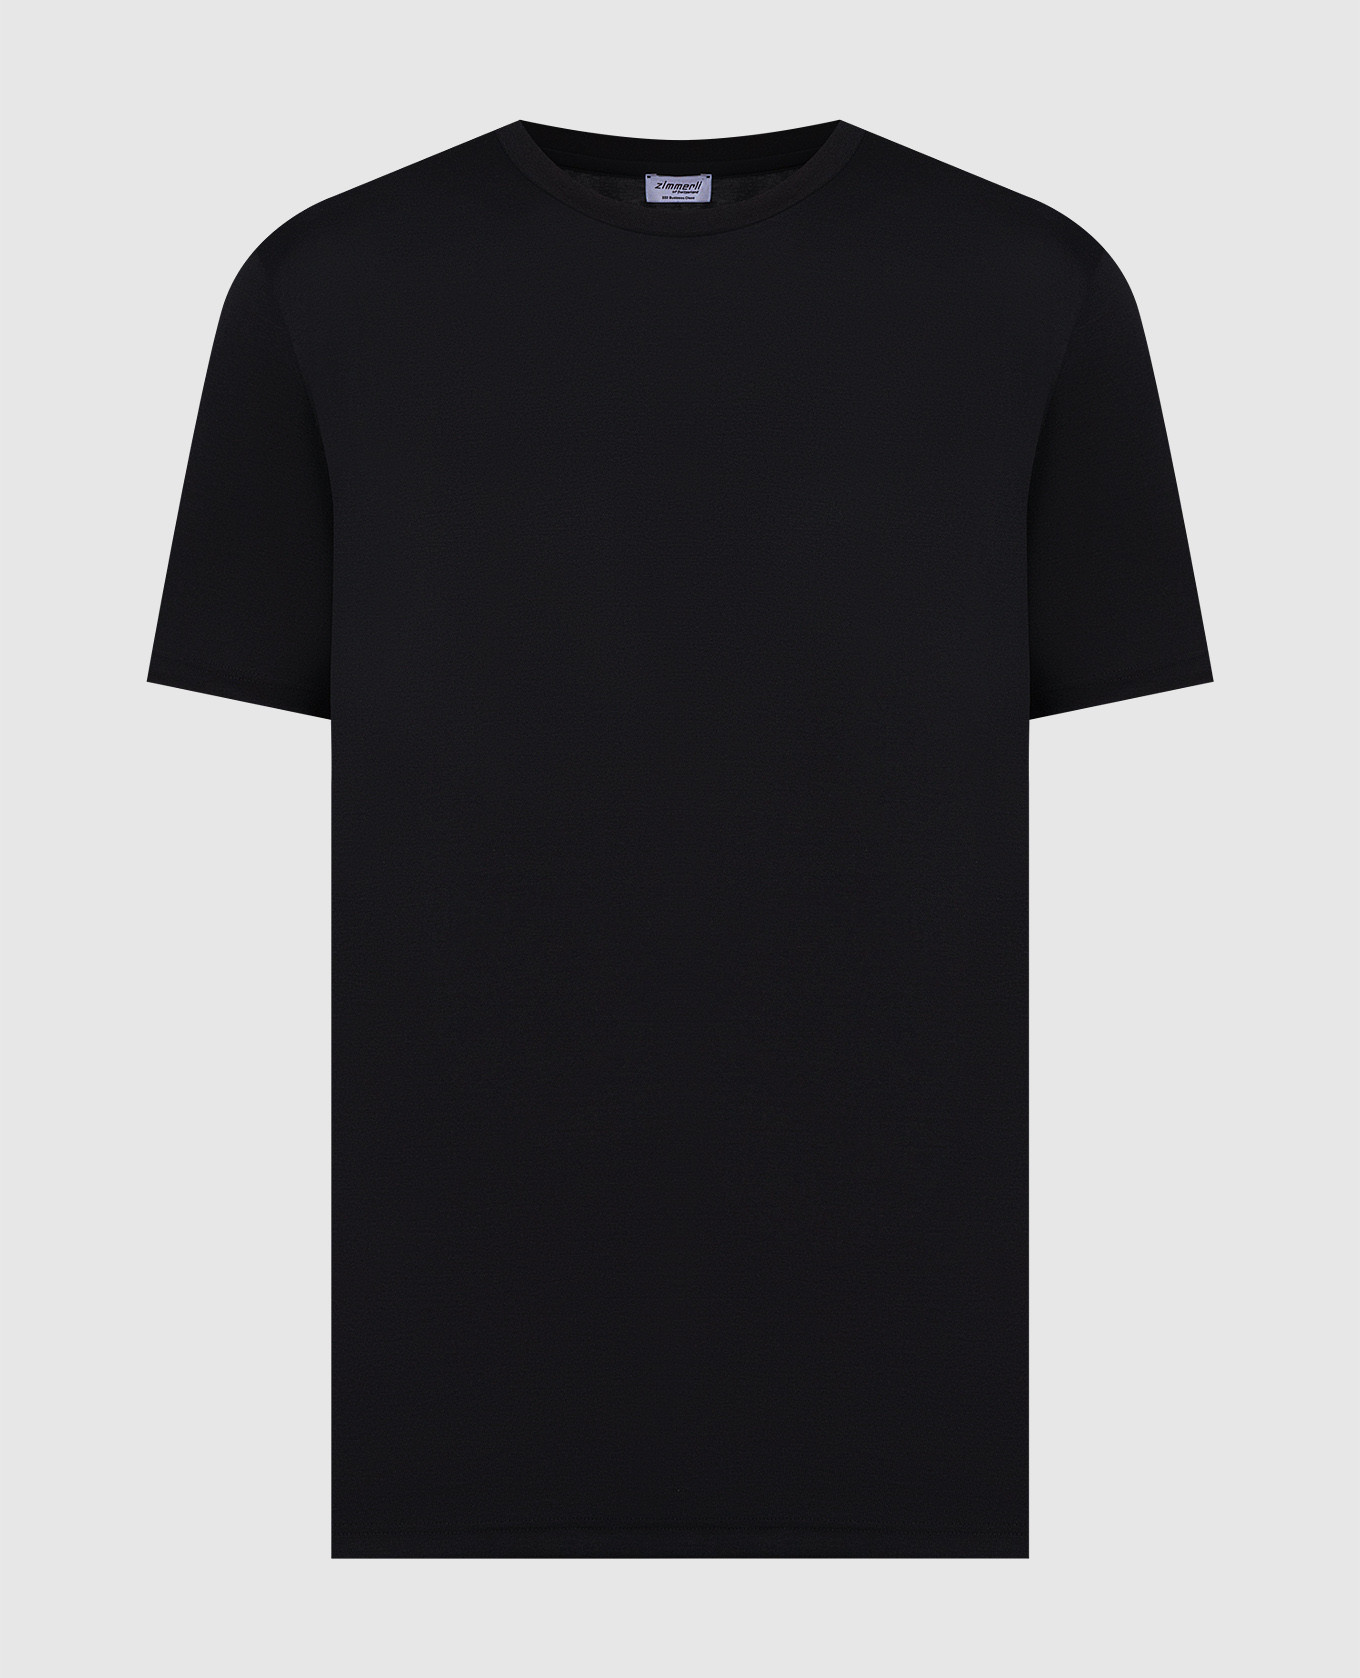 Sea Island black t-shirt